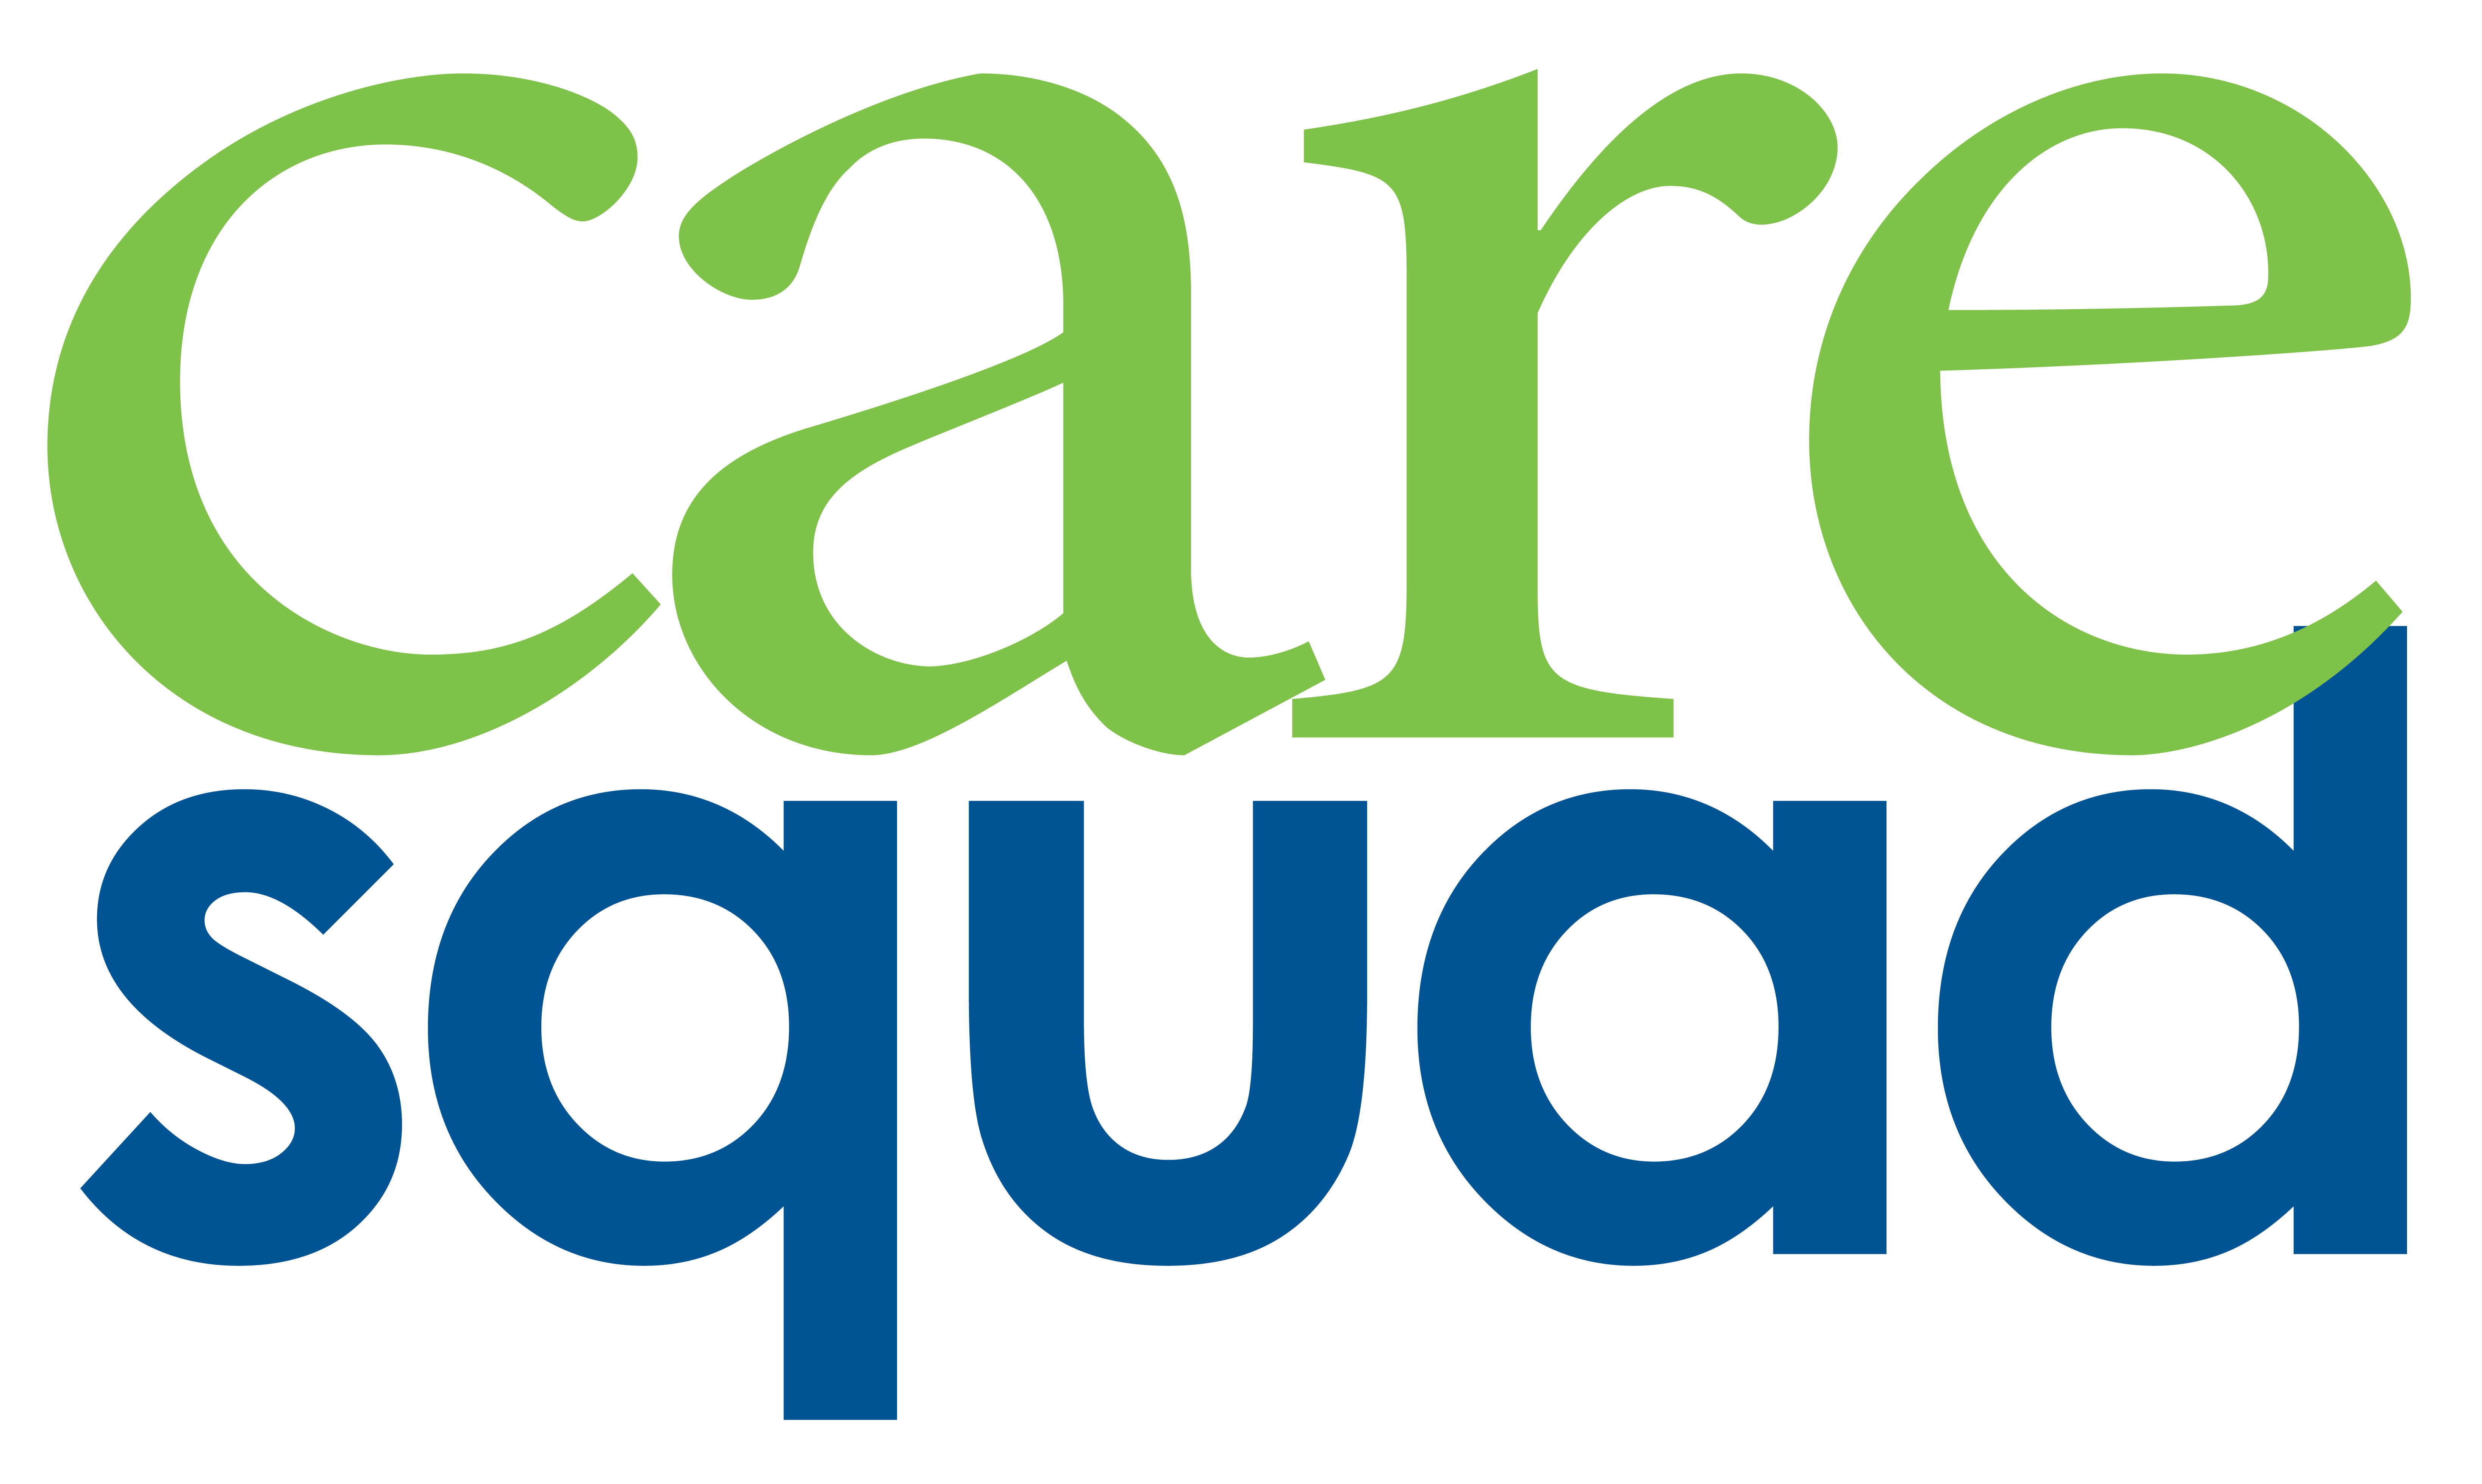 Caresquad corporate logo